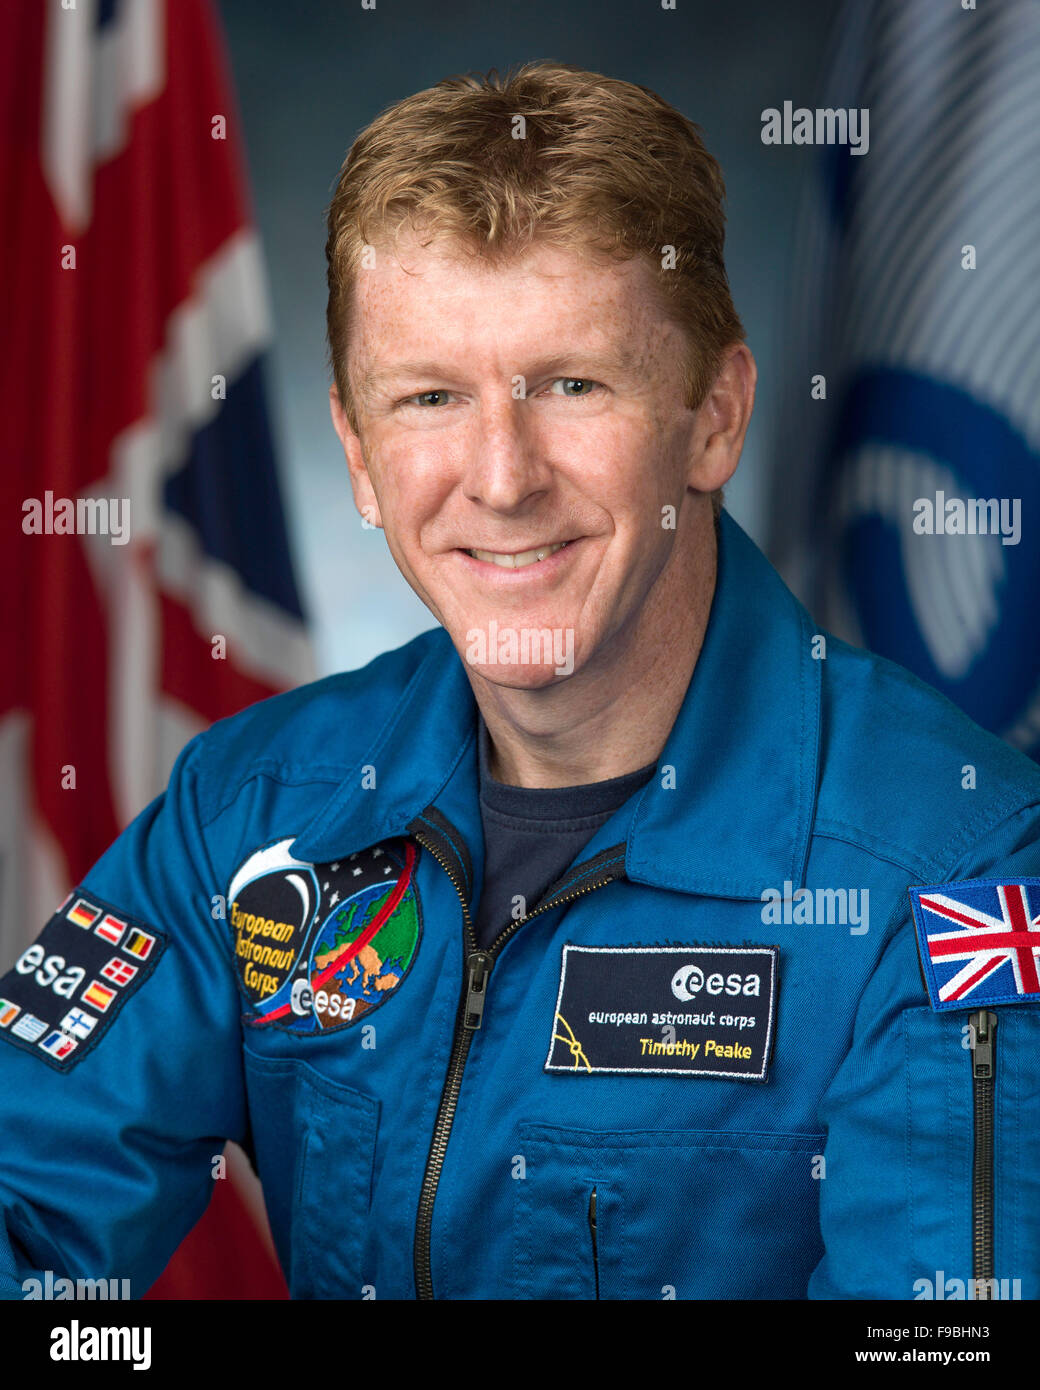 Tim Peake, British astronaut Timothy Peake. Official NASA portrait of British astronaut Timothy Peake Stock Photo